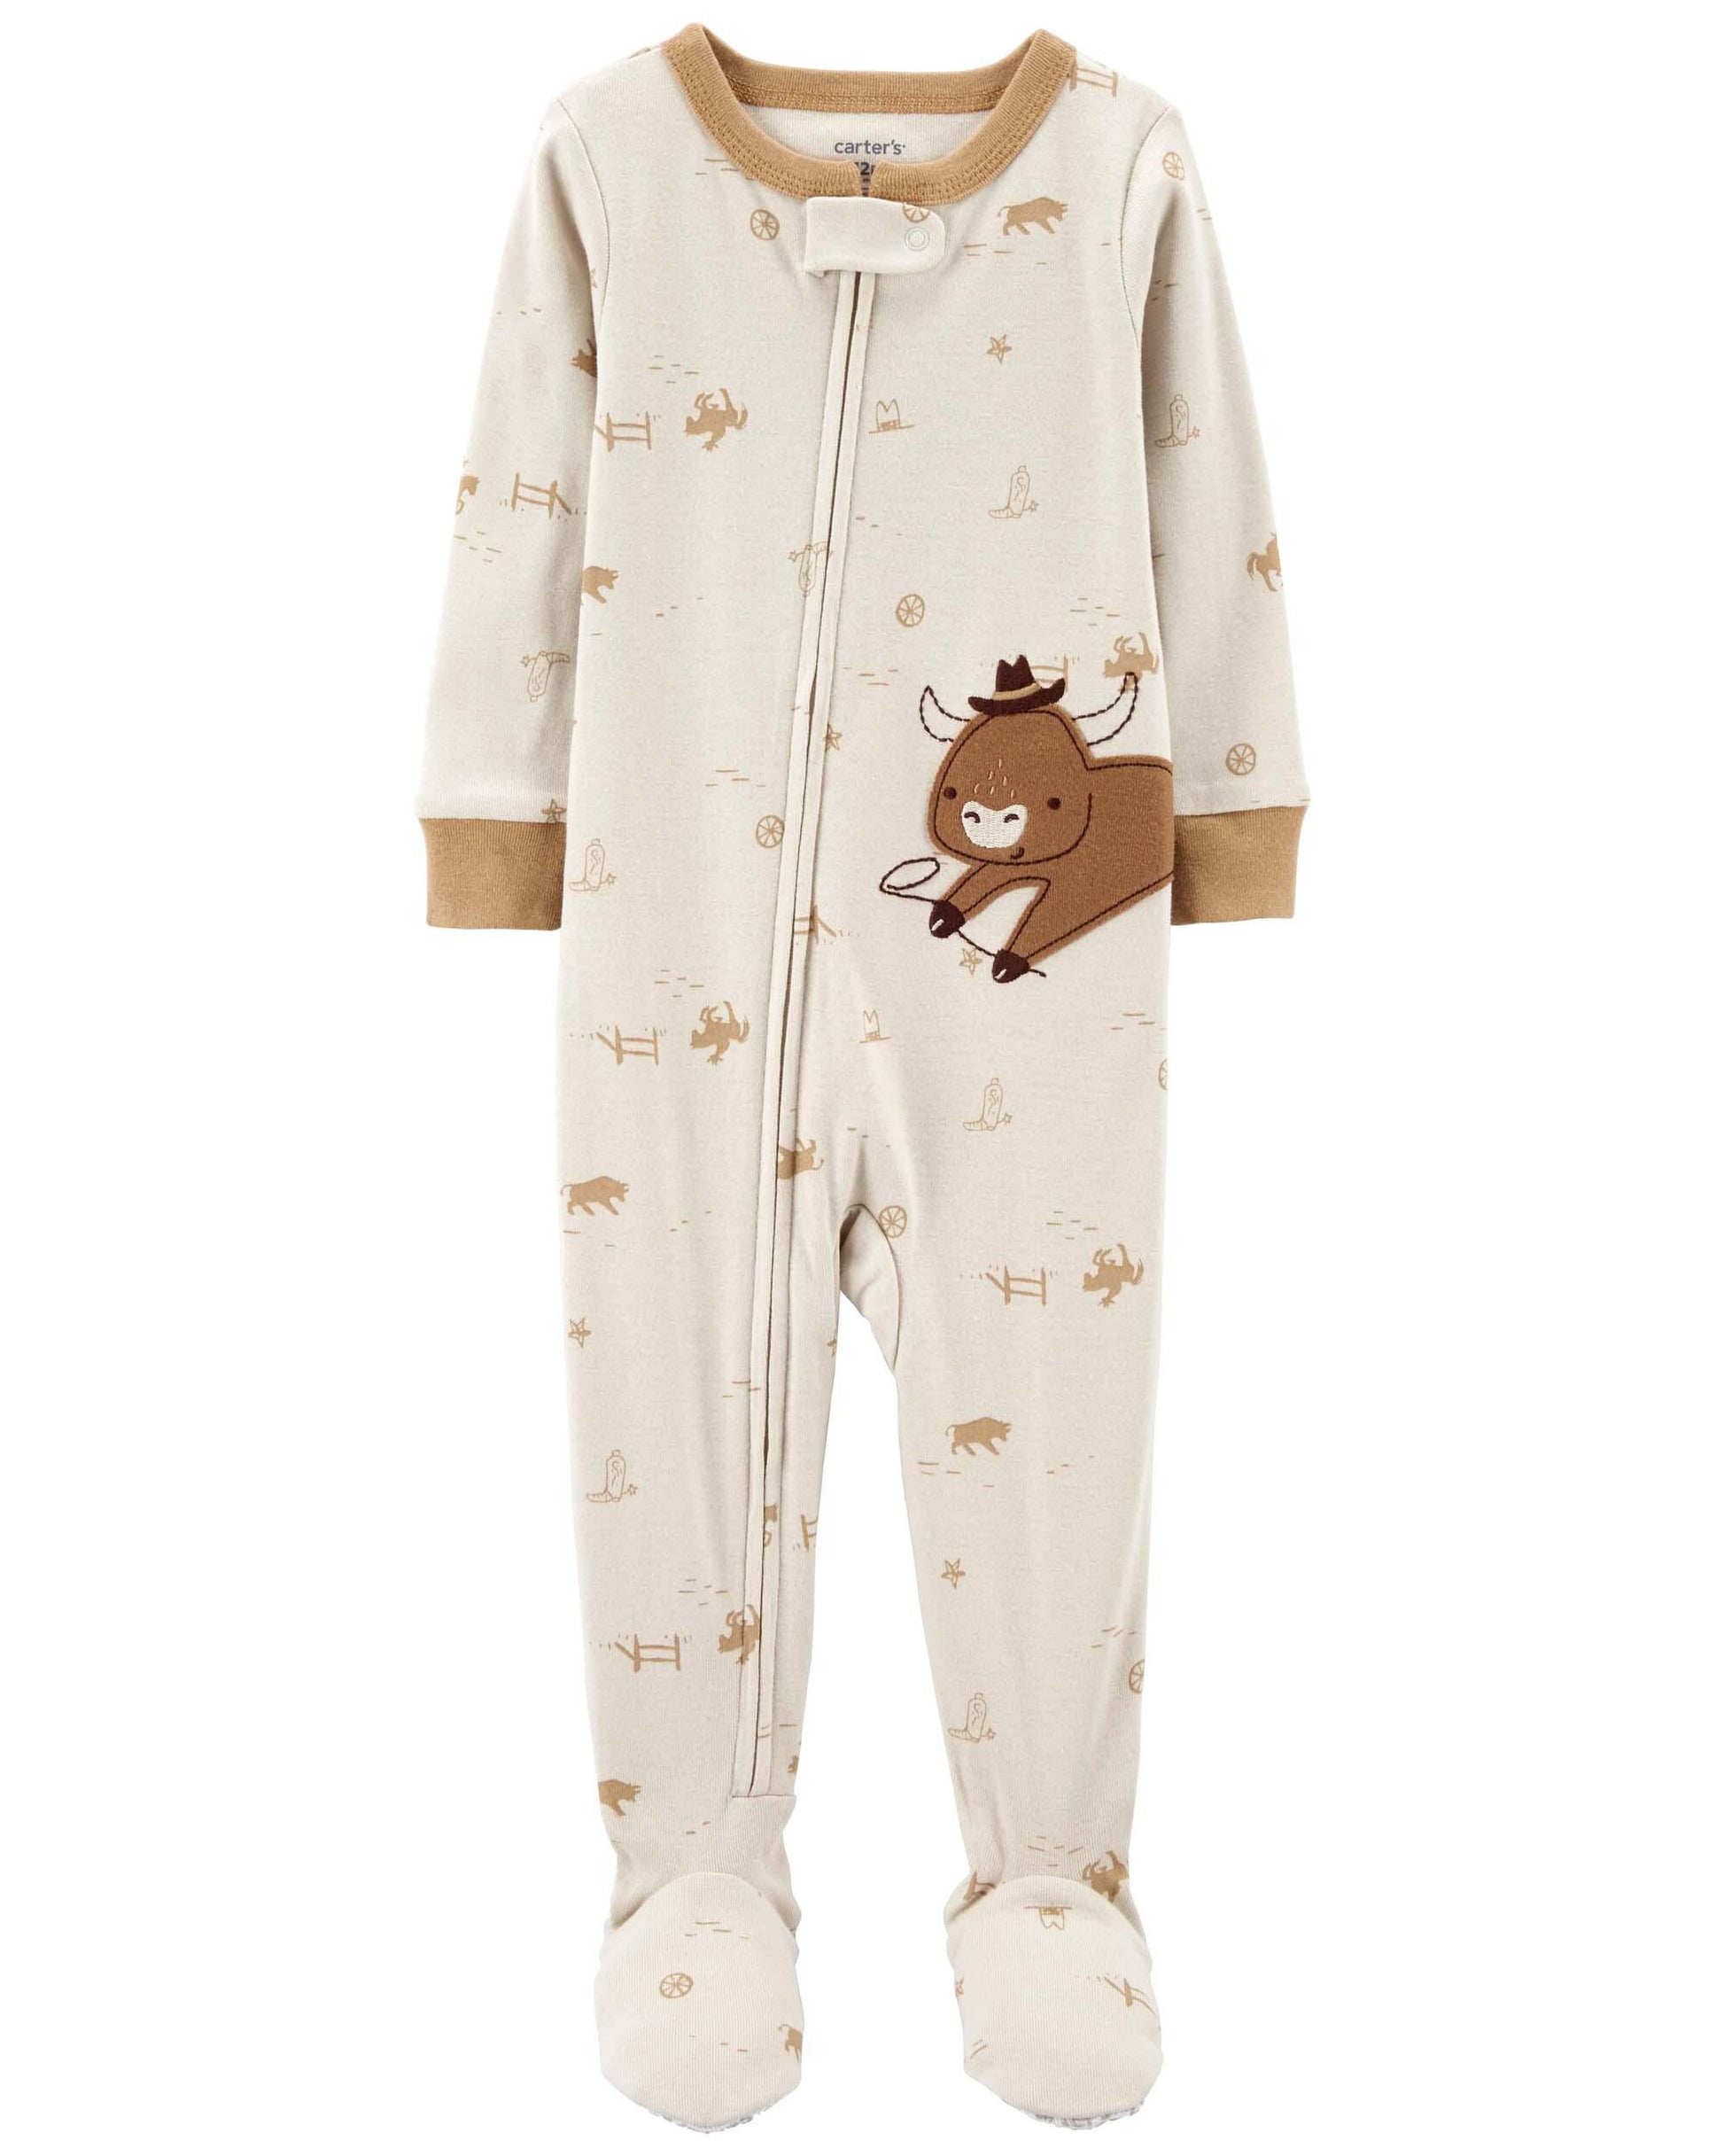 Carter's Toddler 1-Piece Cow 100% Snug Fit Cotton Footie Pajamas